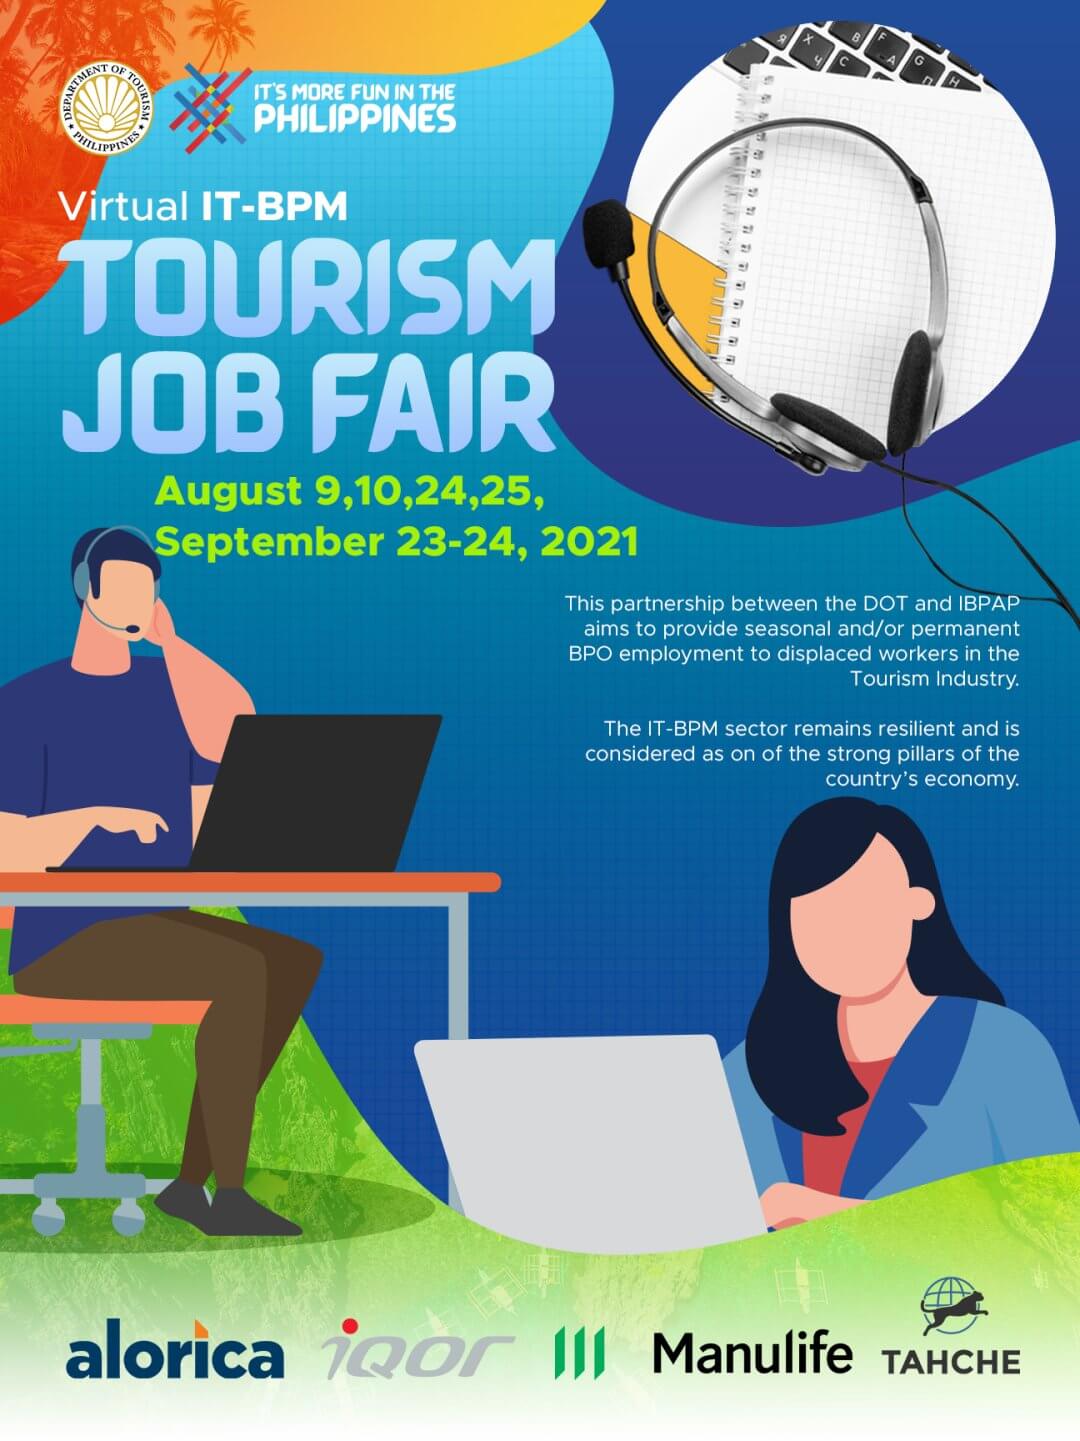 DOT: Virtual IT-BPM Tourism Job Fair